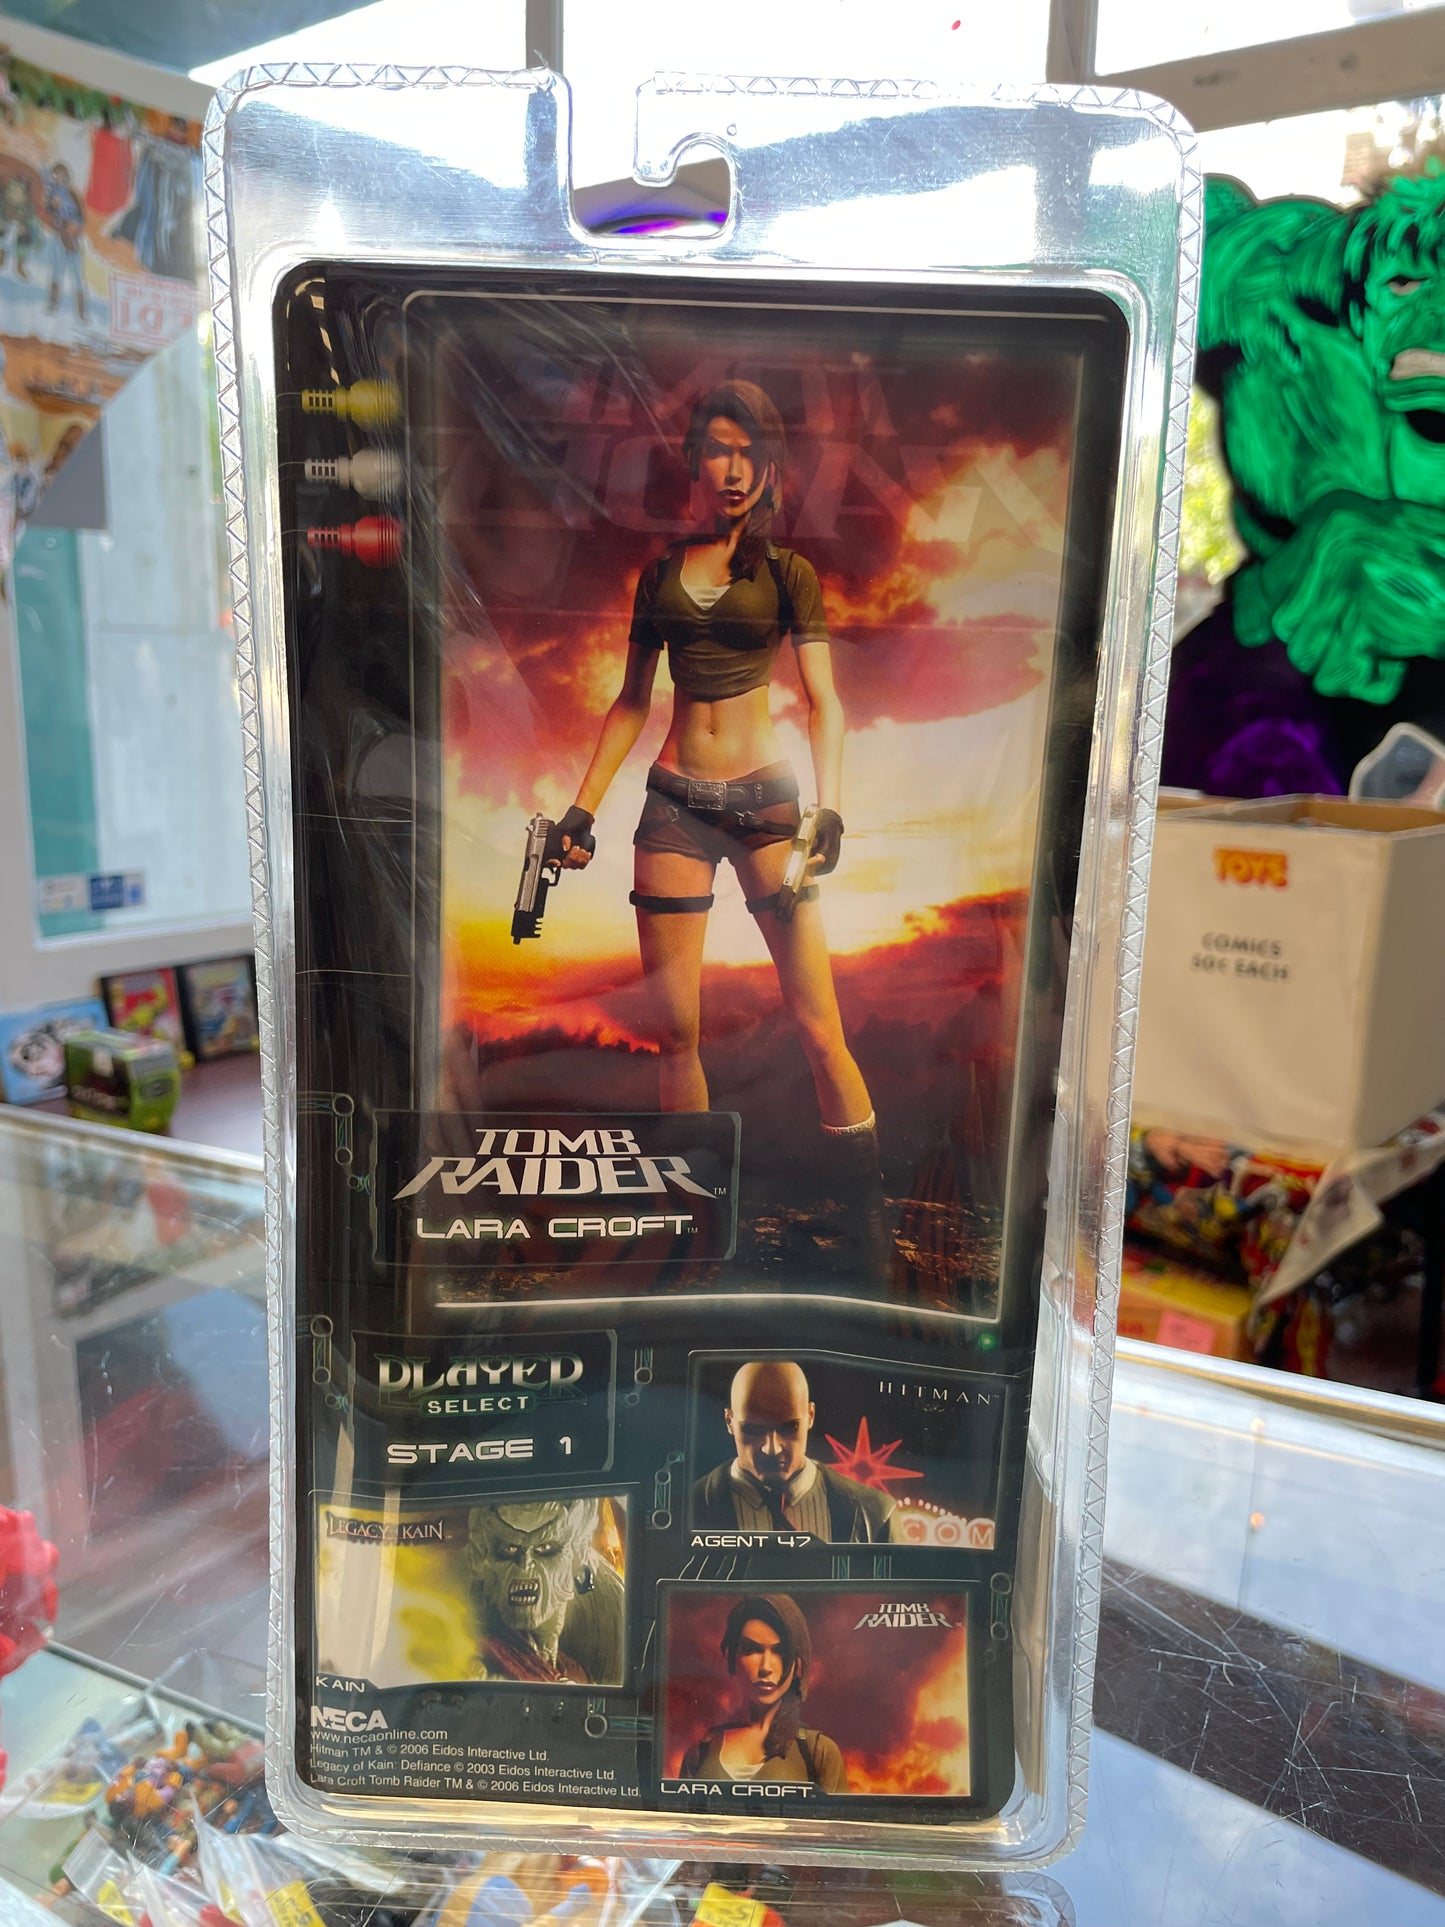 Neca Tomb Raider Lara Croft